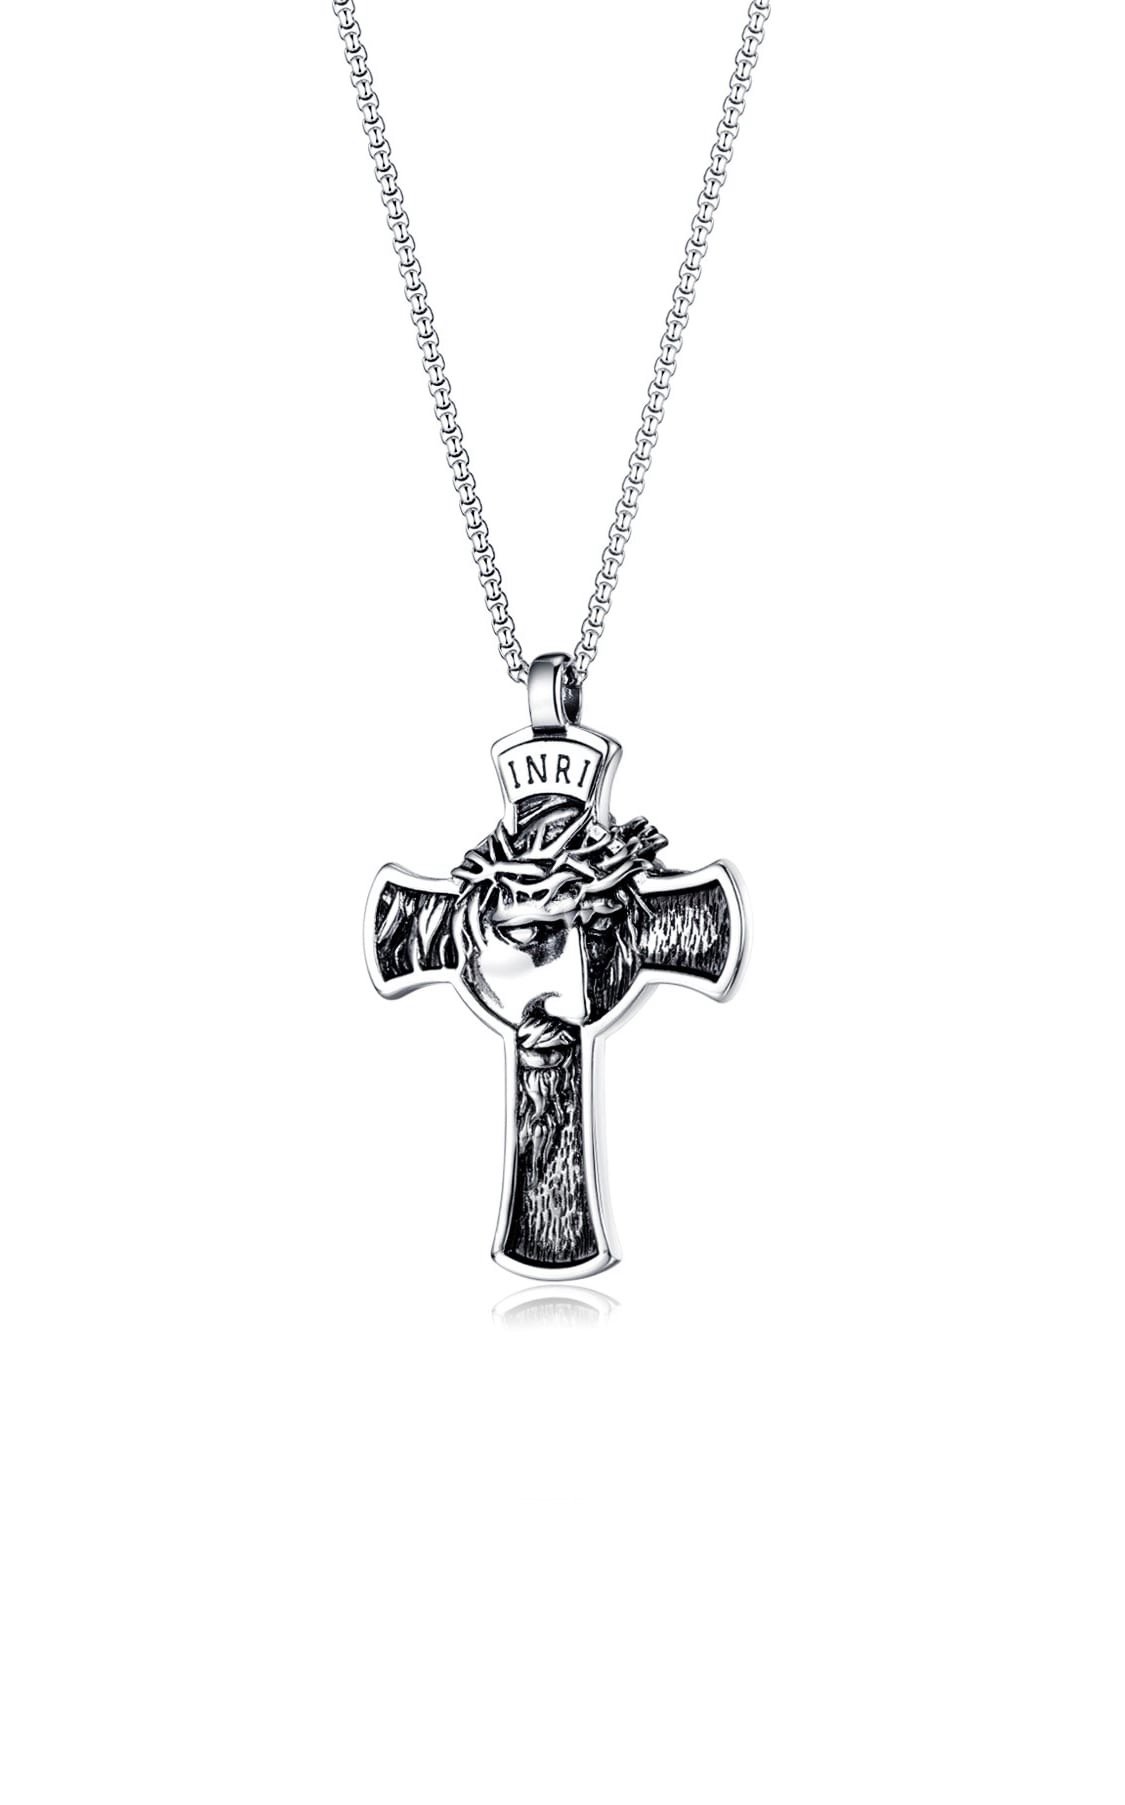 Image of “Eternal Life” Jesus I.N.R.I Cross Pendant & Chain